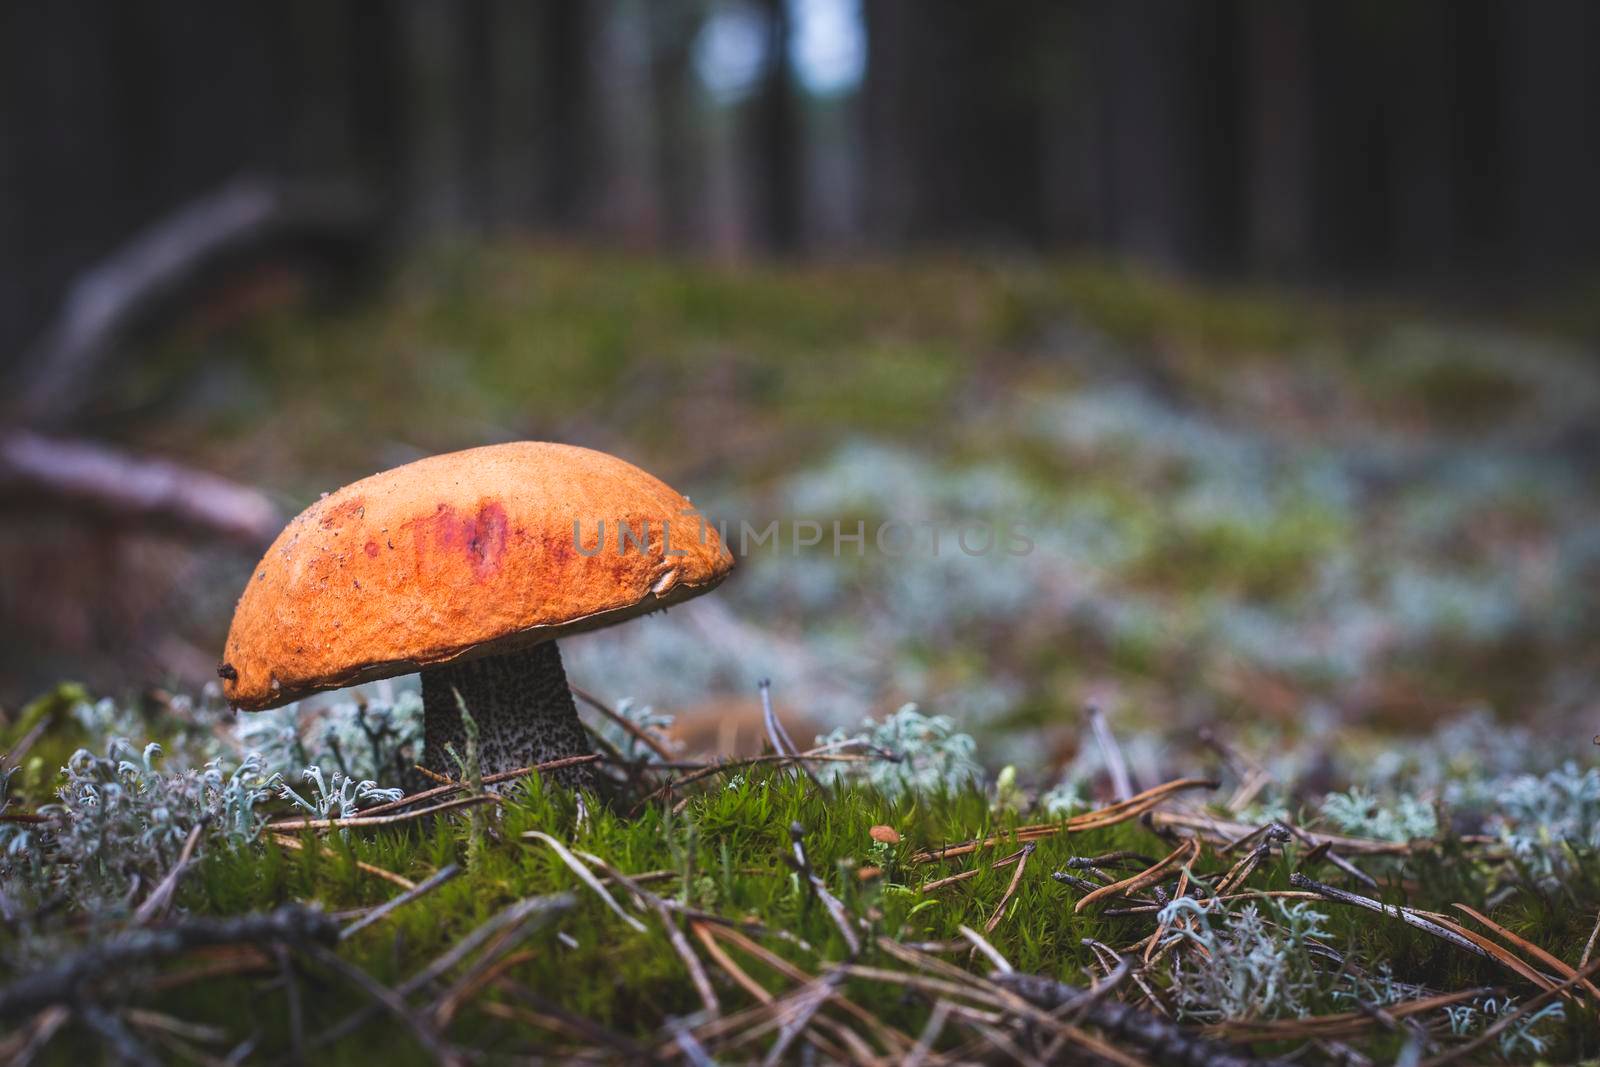 One red cap edible mushroom grows in moss. Orange cap mushrooms in wood